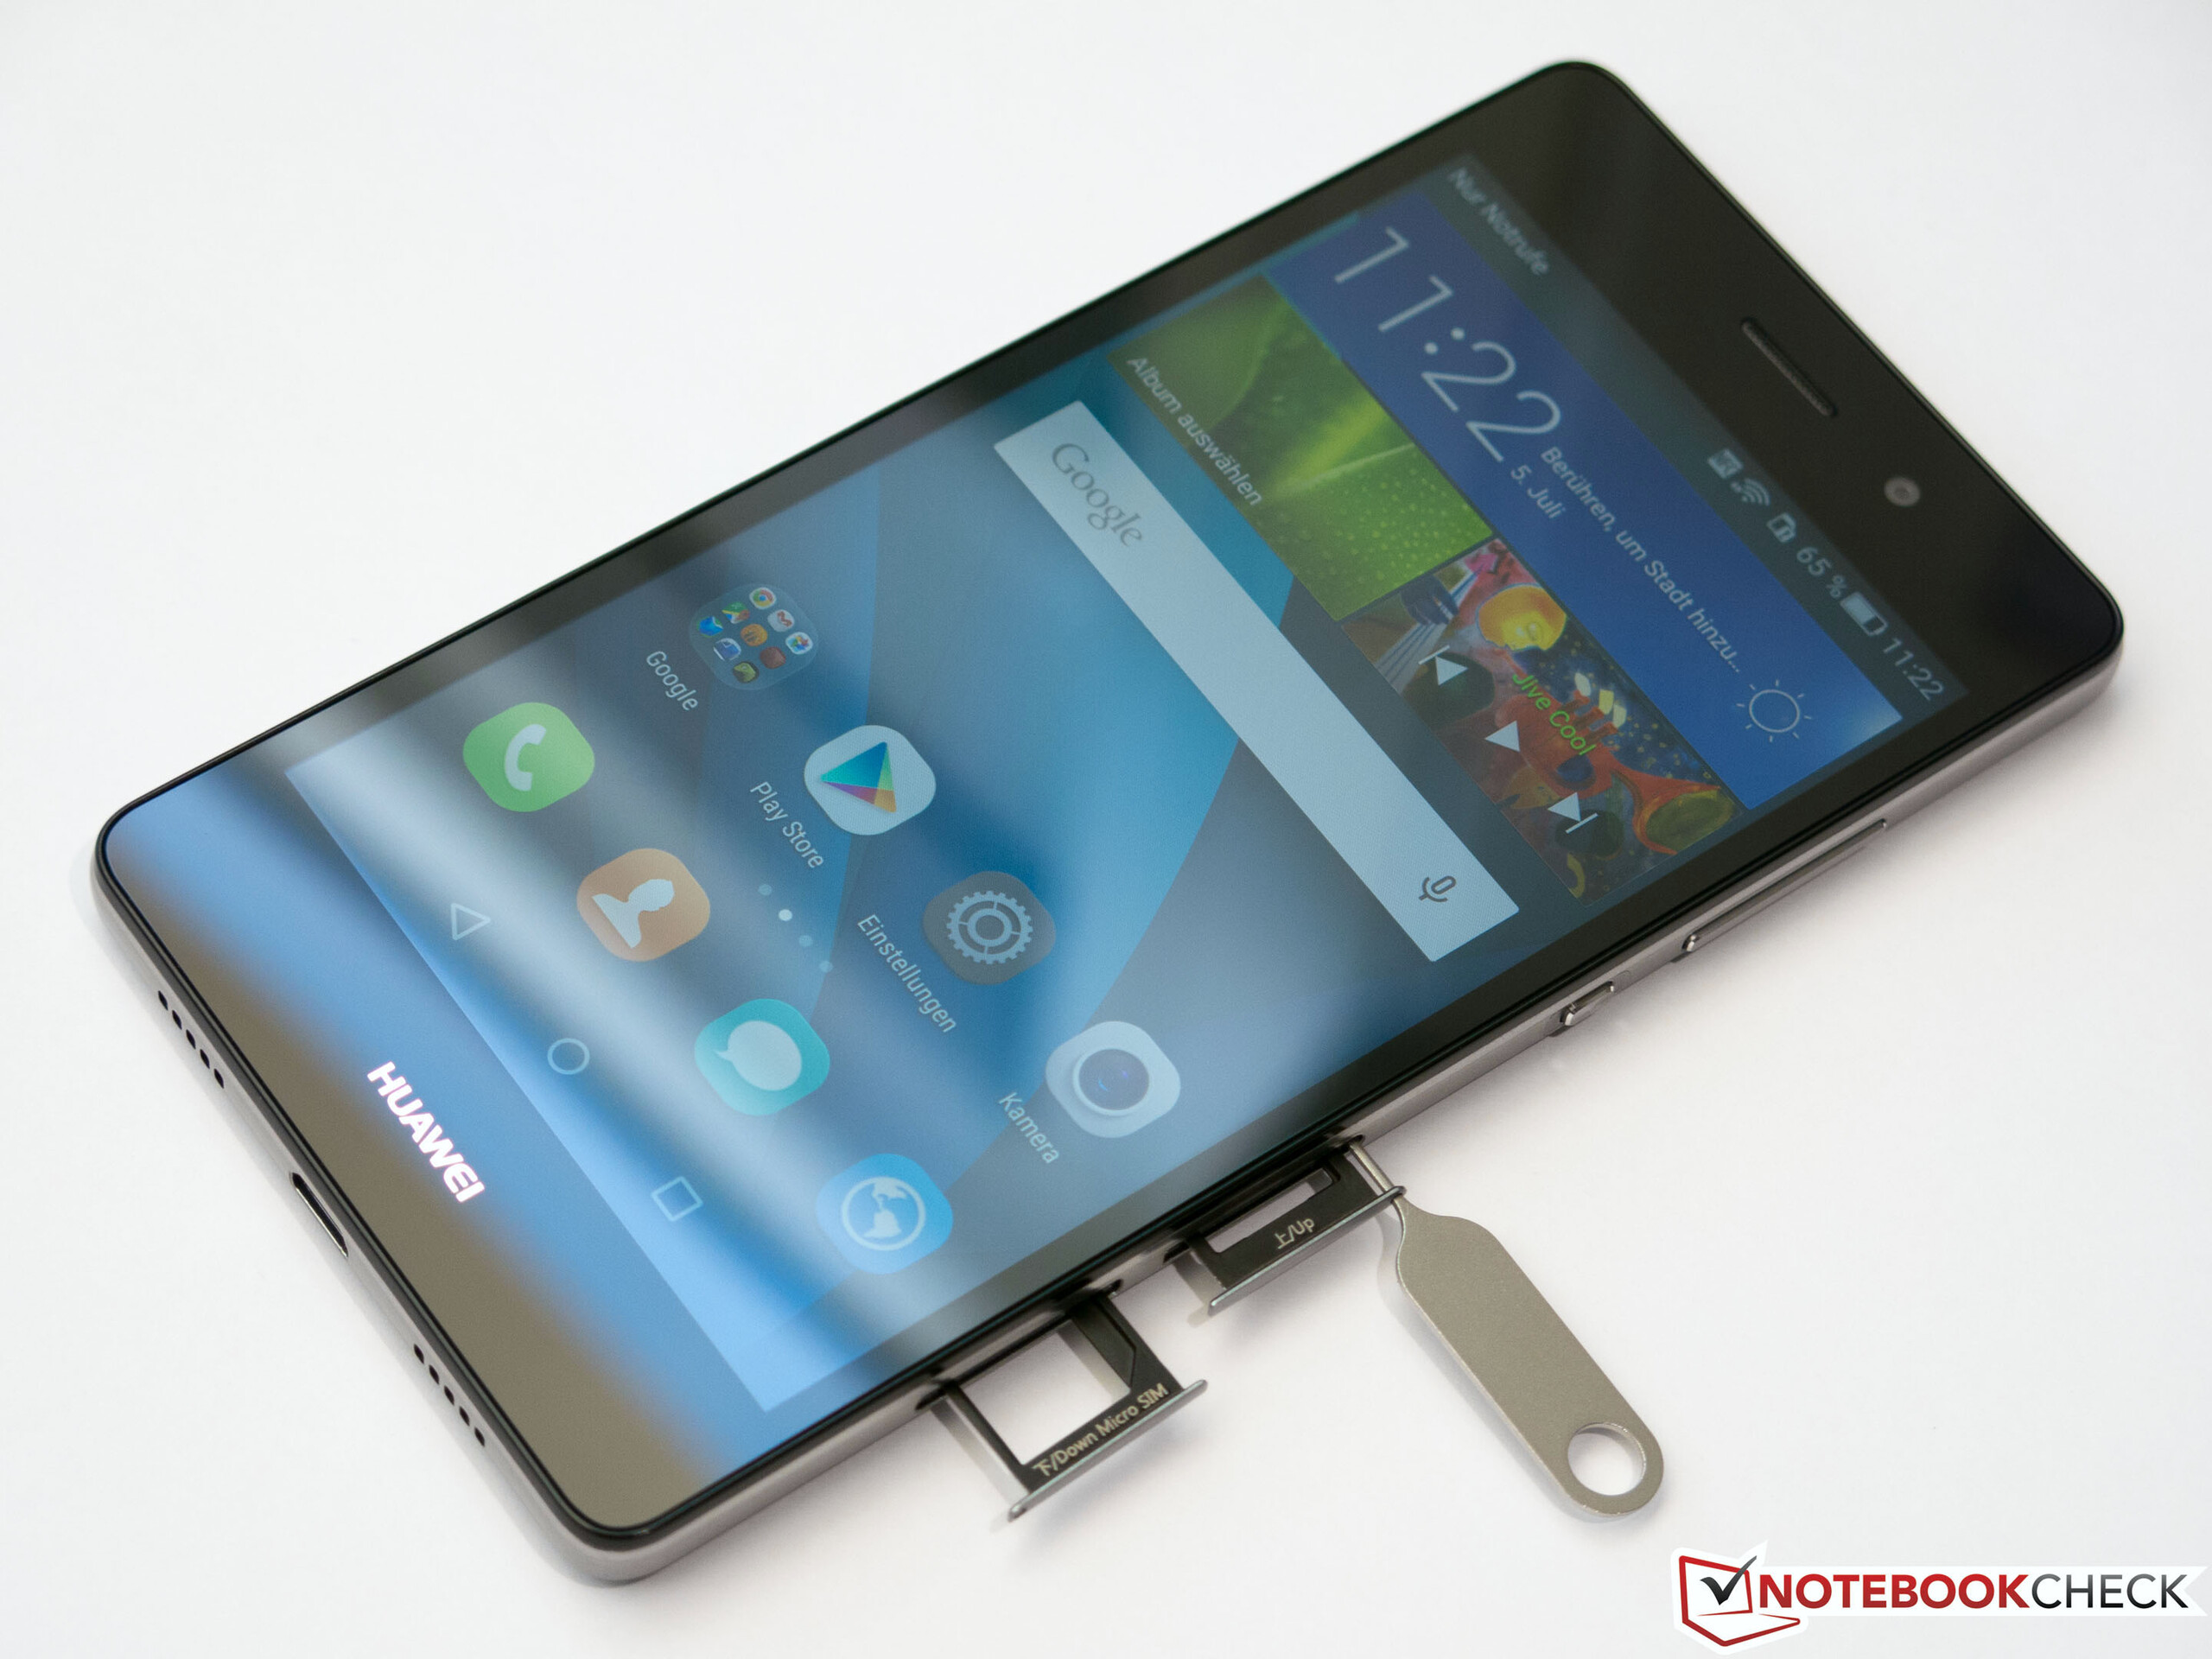 leveren kunst katoen Huawei P8 lite Smartphone Review - NotebookCheck.net Reviews